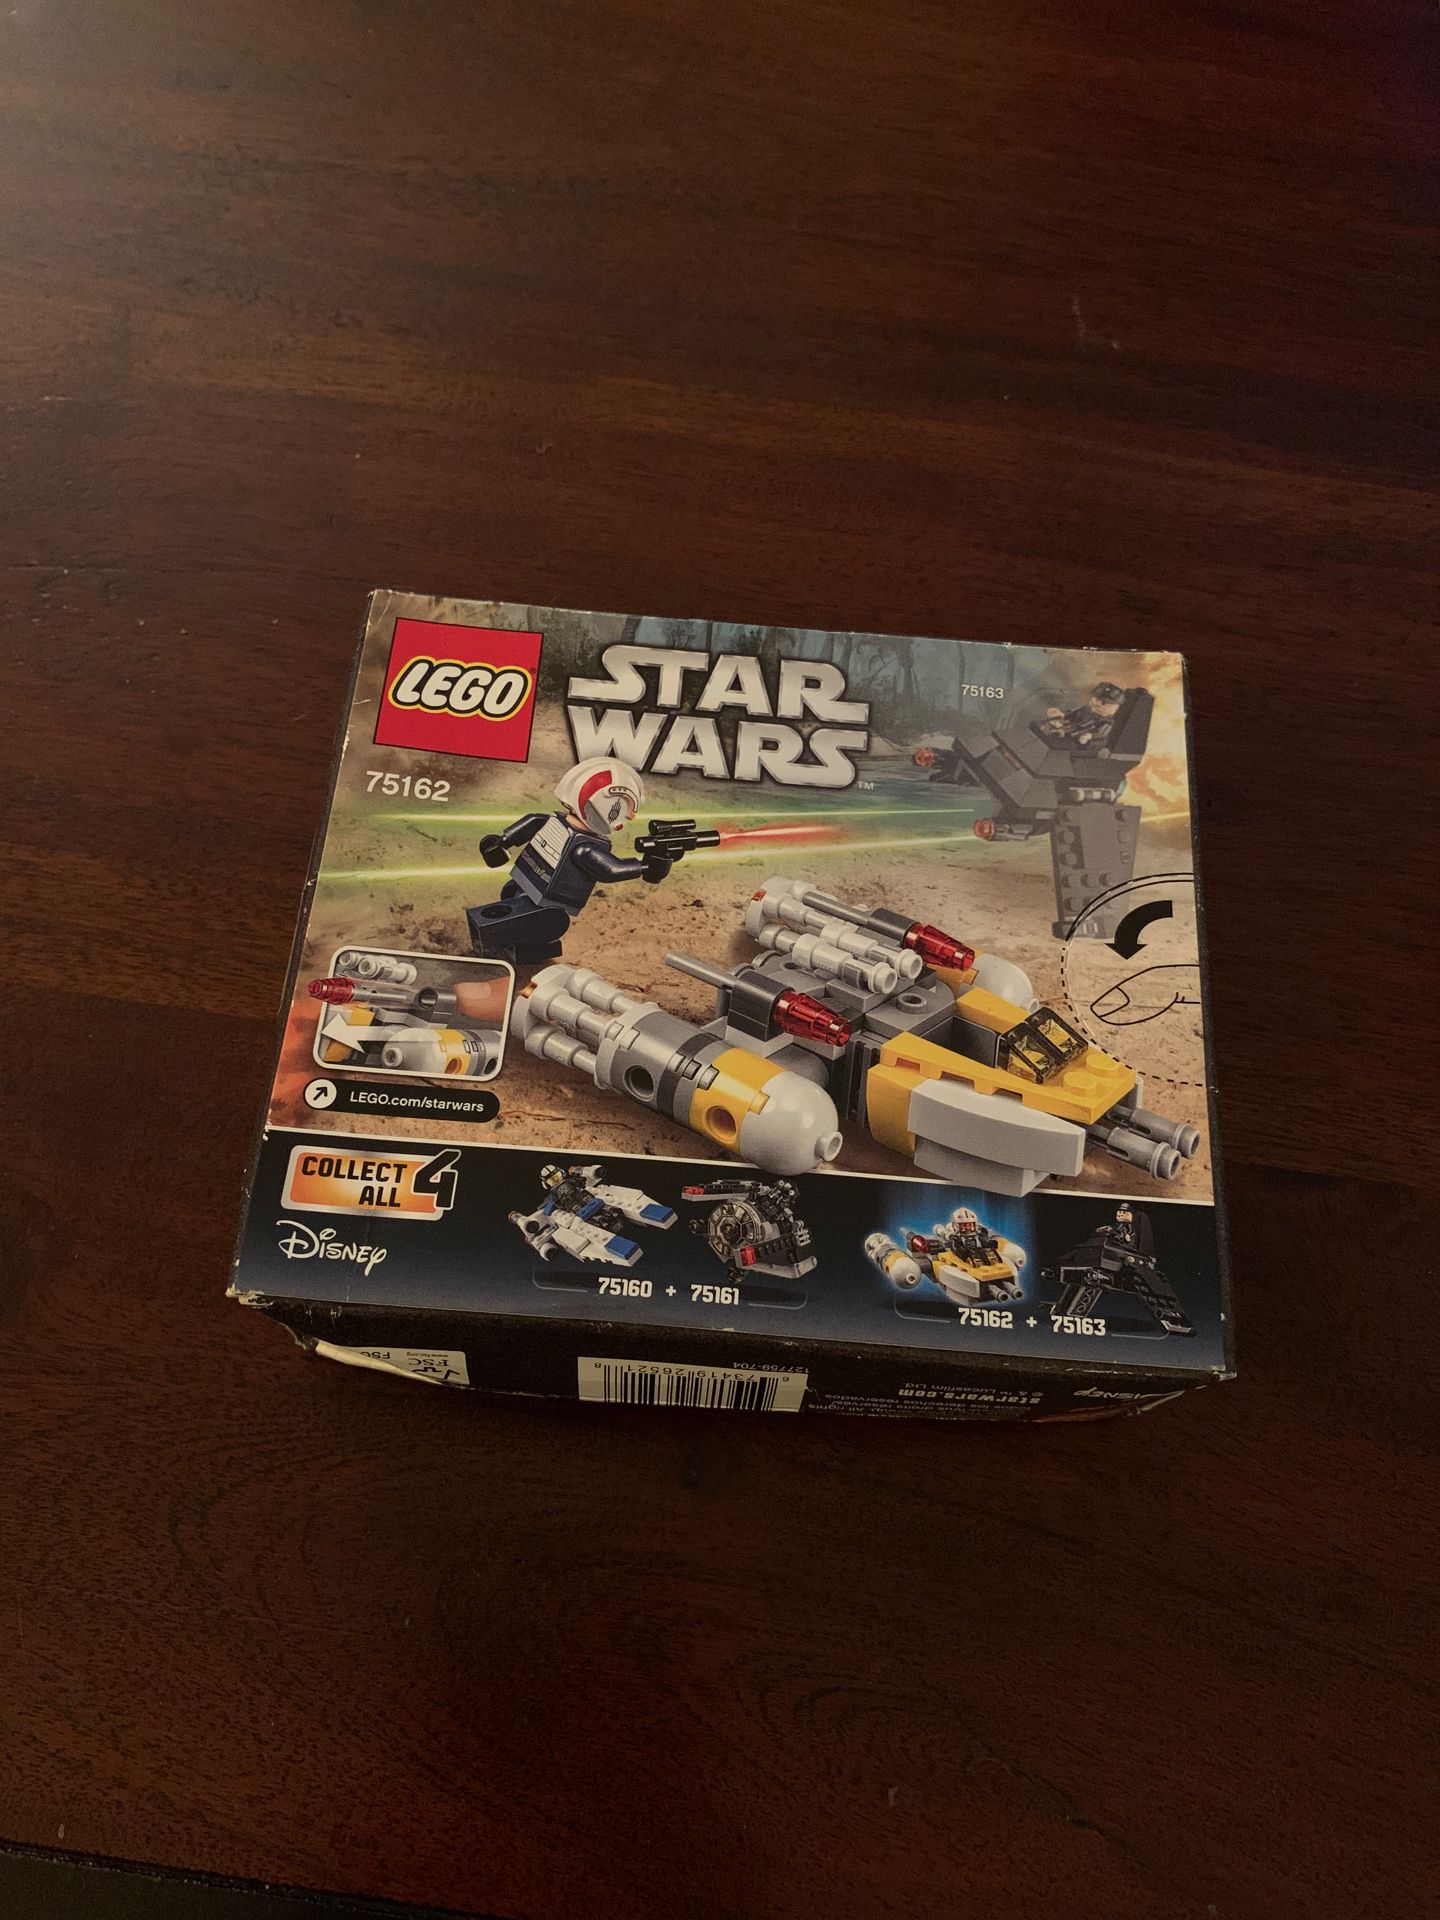 LEGO Star Wars set 75162 — Brand New